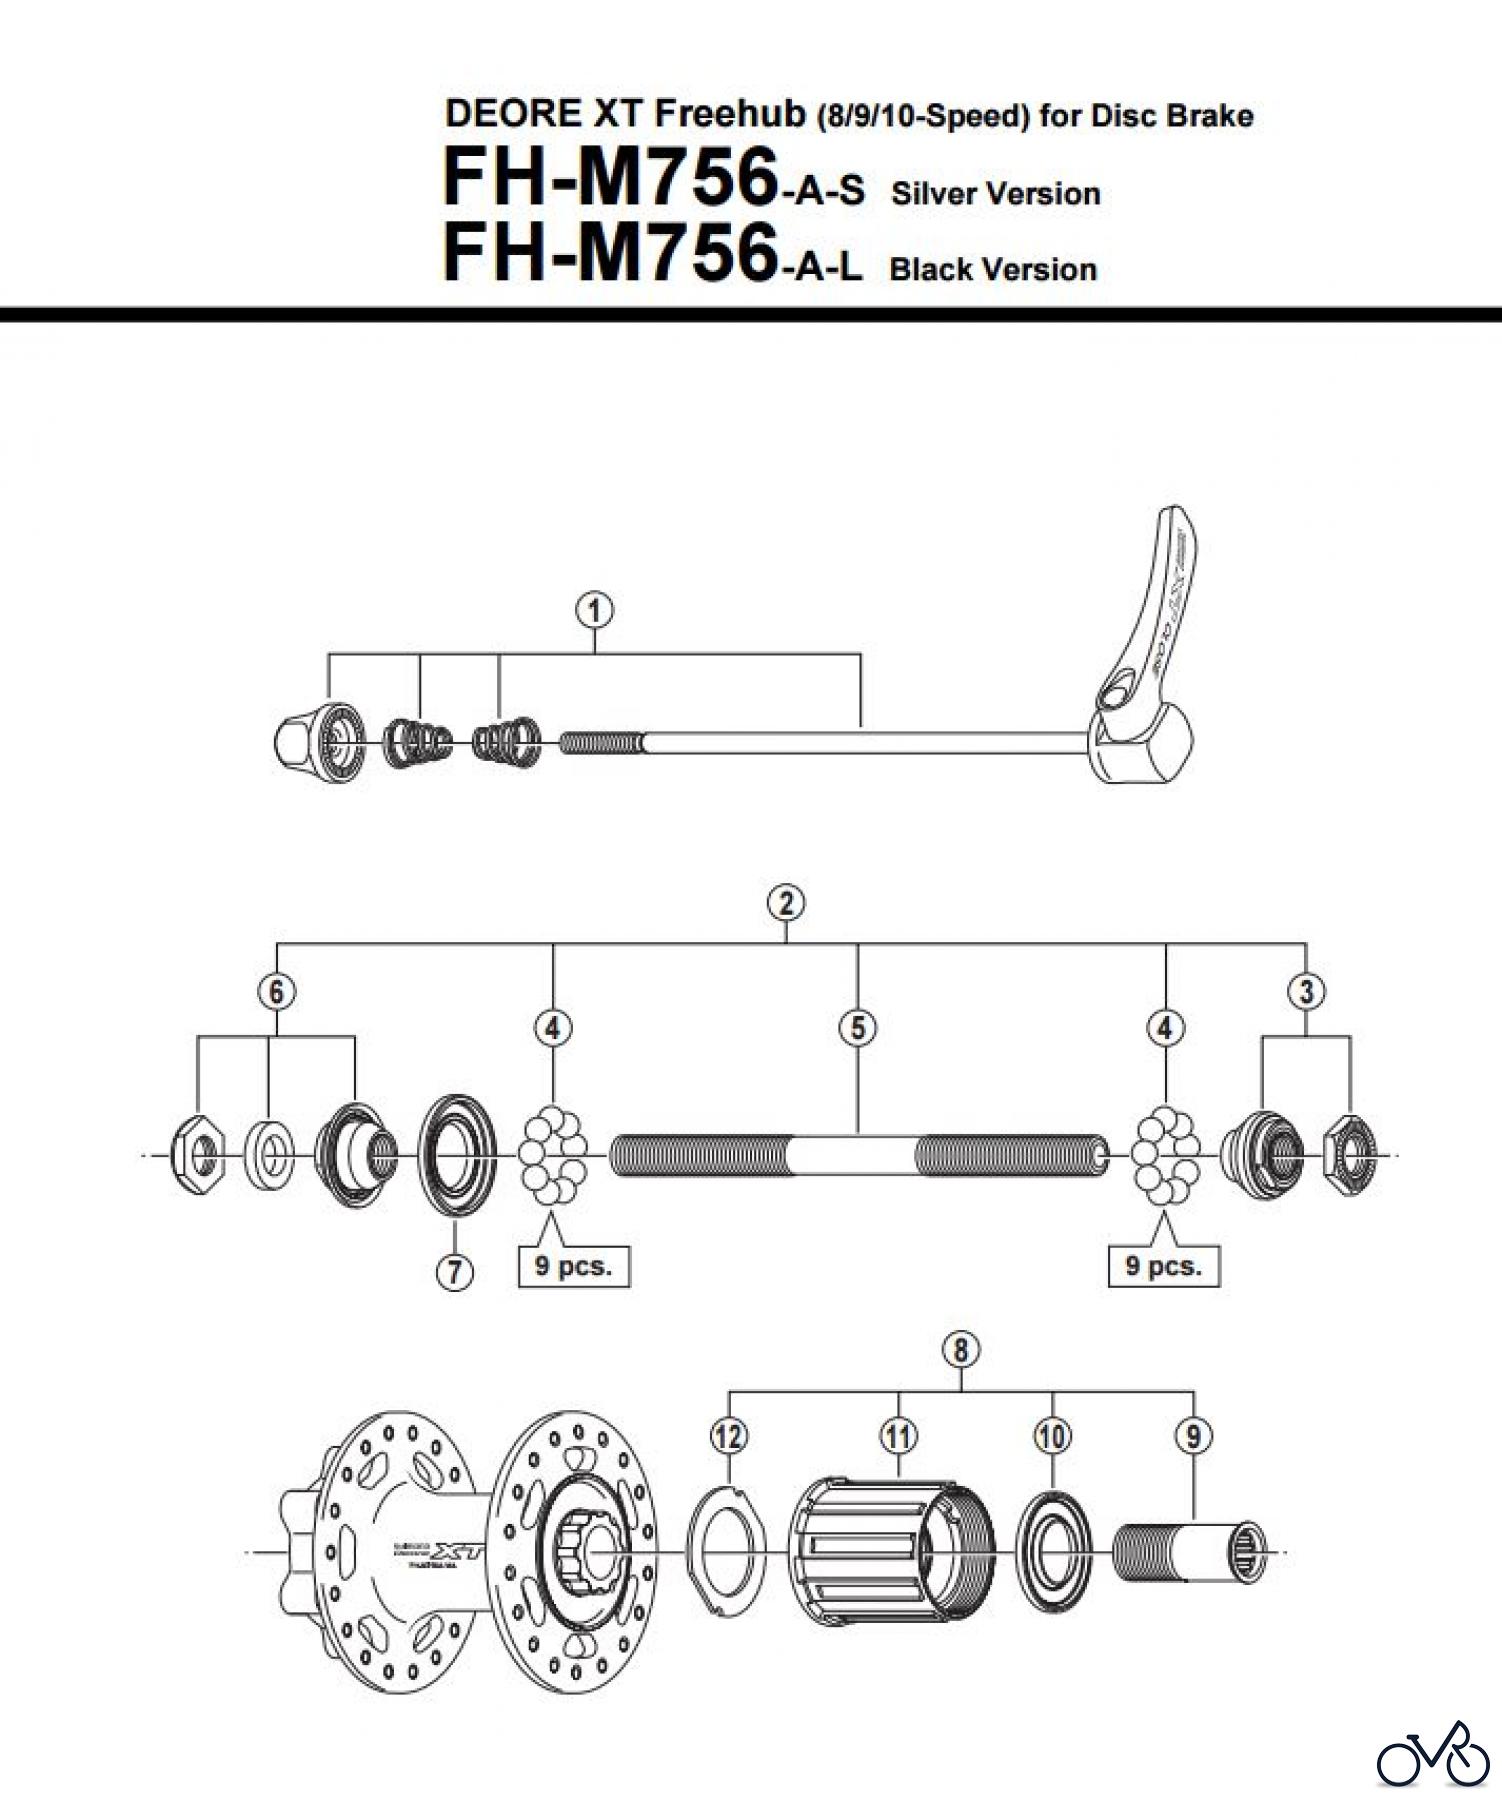  Shimano FH Free Hub - Freilaufnabe FH-M756-A -3295 DEORE XT Freehub (8/9/10-Speed) for Disc Brake